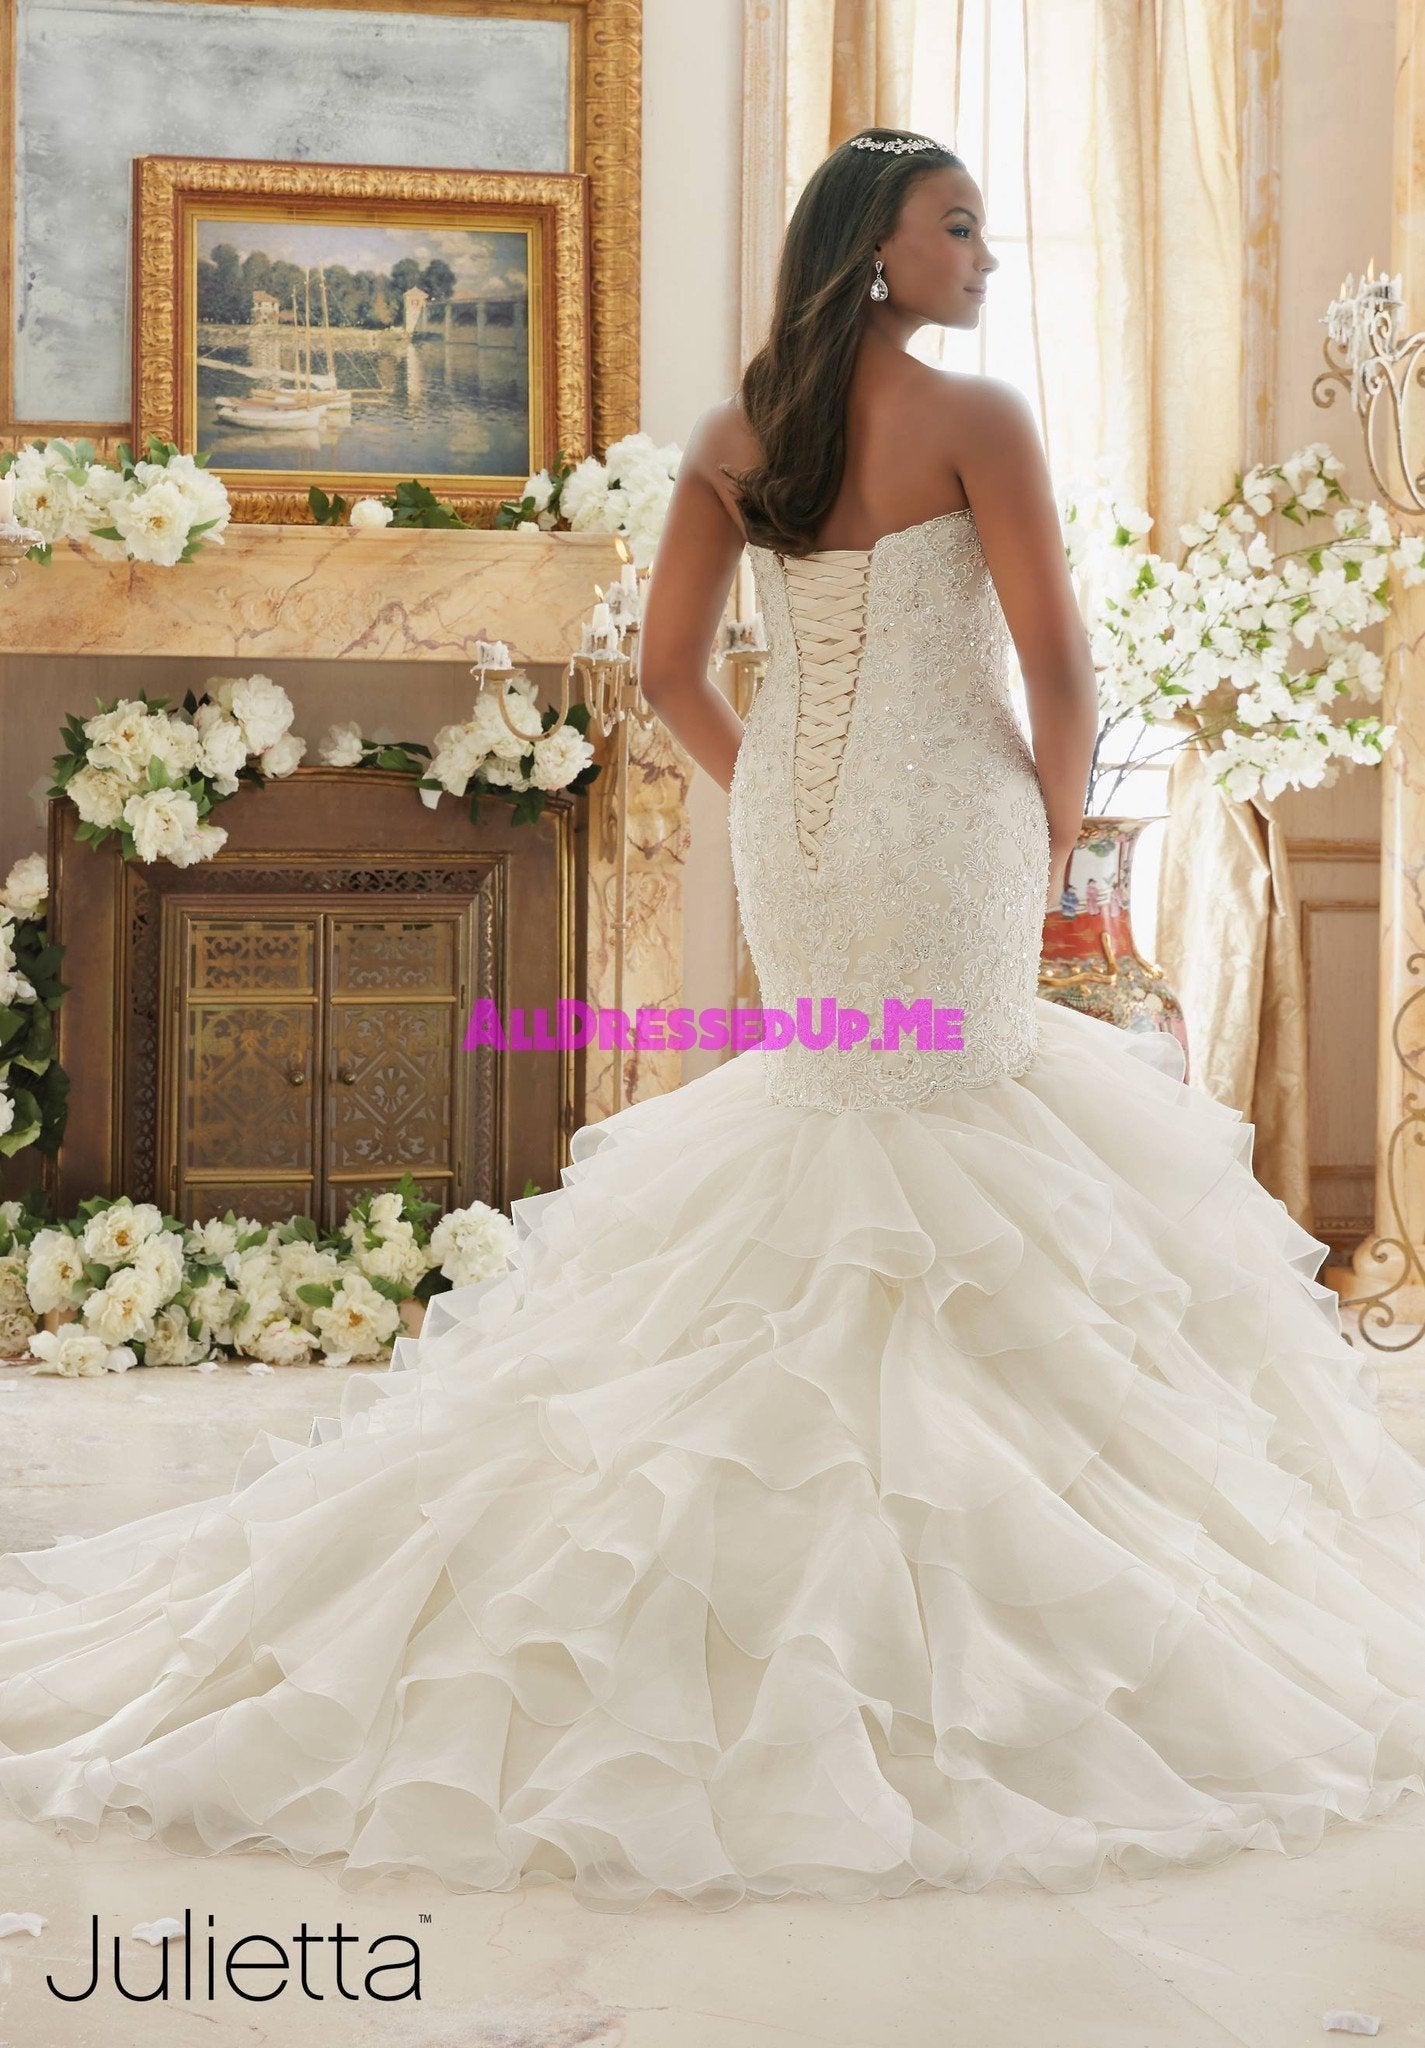 Julietta - 3201 - Cheron's Bridal, Wedding Gown - Morilee Julietta - - Wedding Gowns Dresses Chattanooga Hixson Shops Boutiques Tennessee TN Georgia GA MSRP Lowest Prices Sale Discount